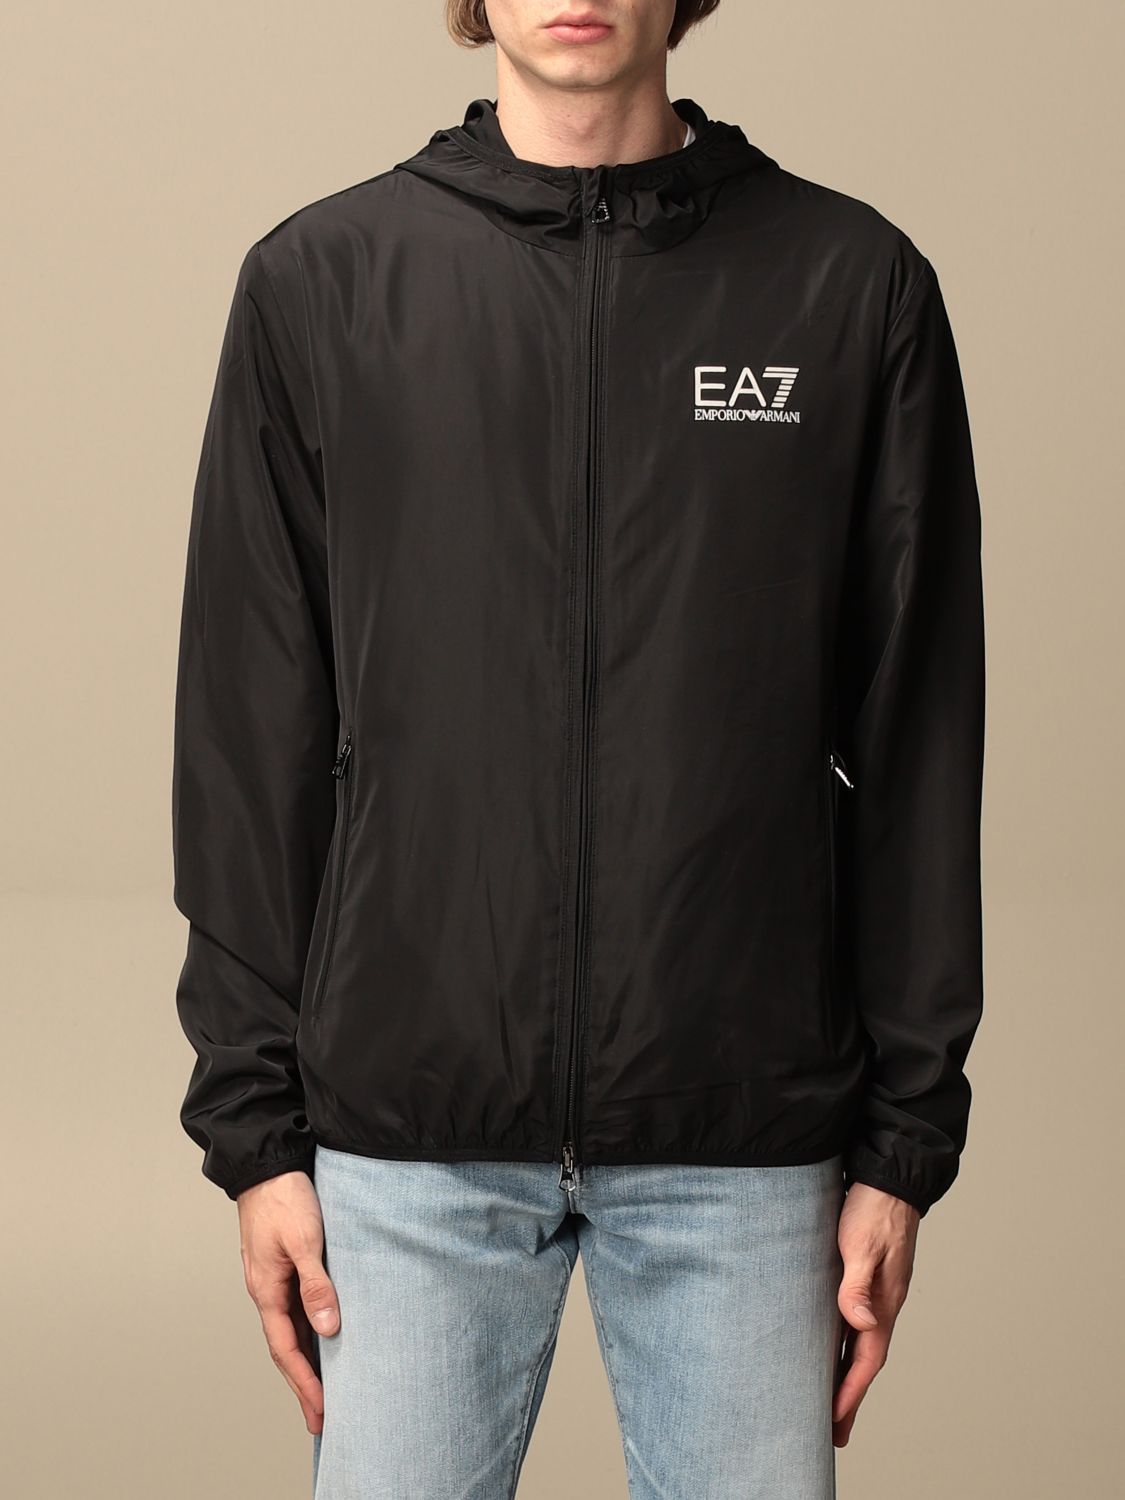 EA7: Blazer men - Black | EA7 jacket 8NPB04 PNN7Z online at GIGLIO.COM